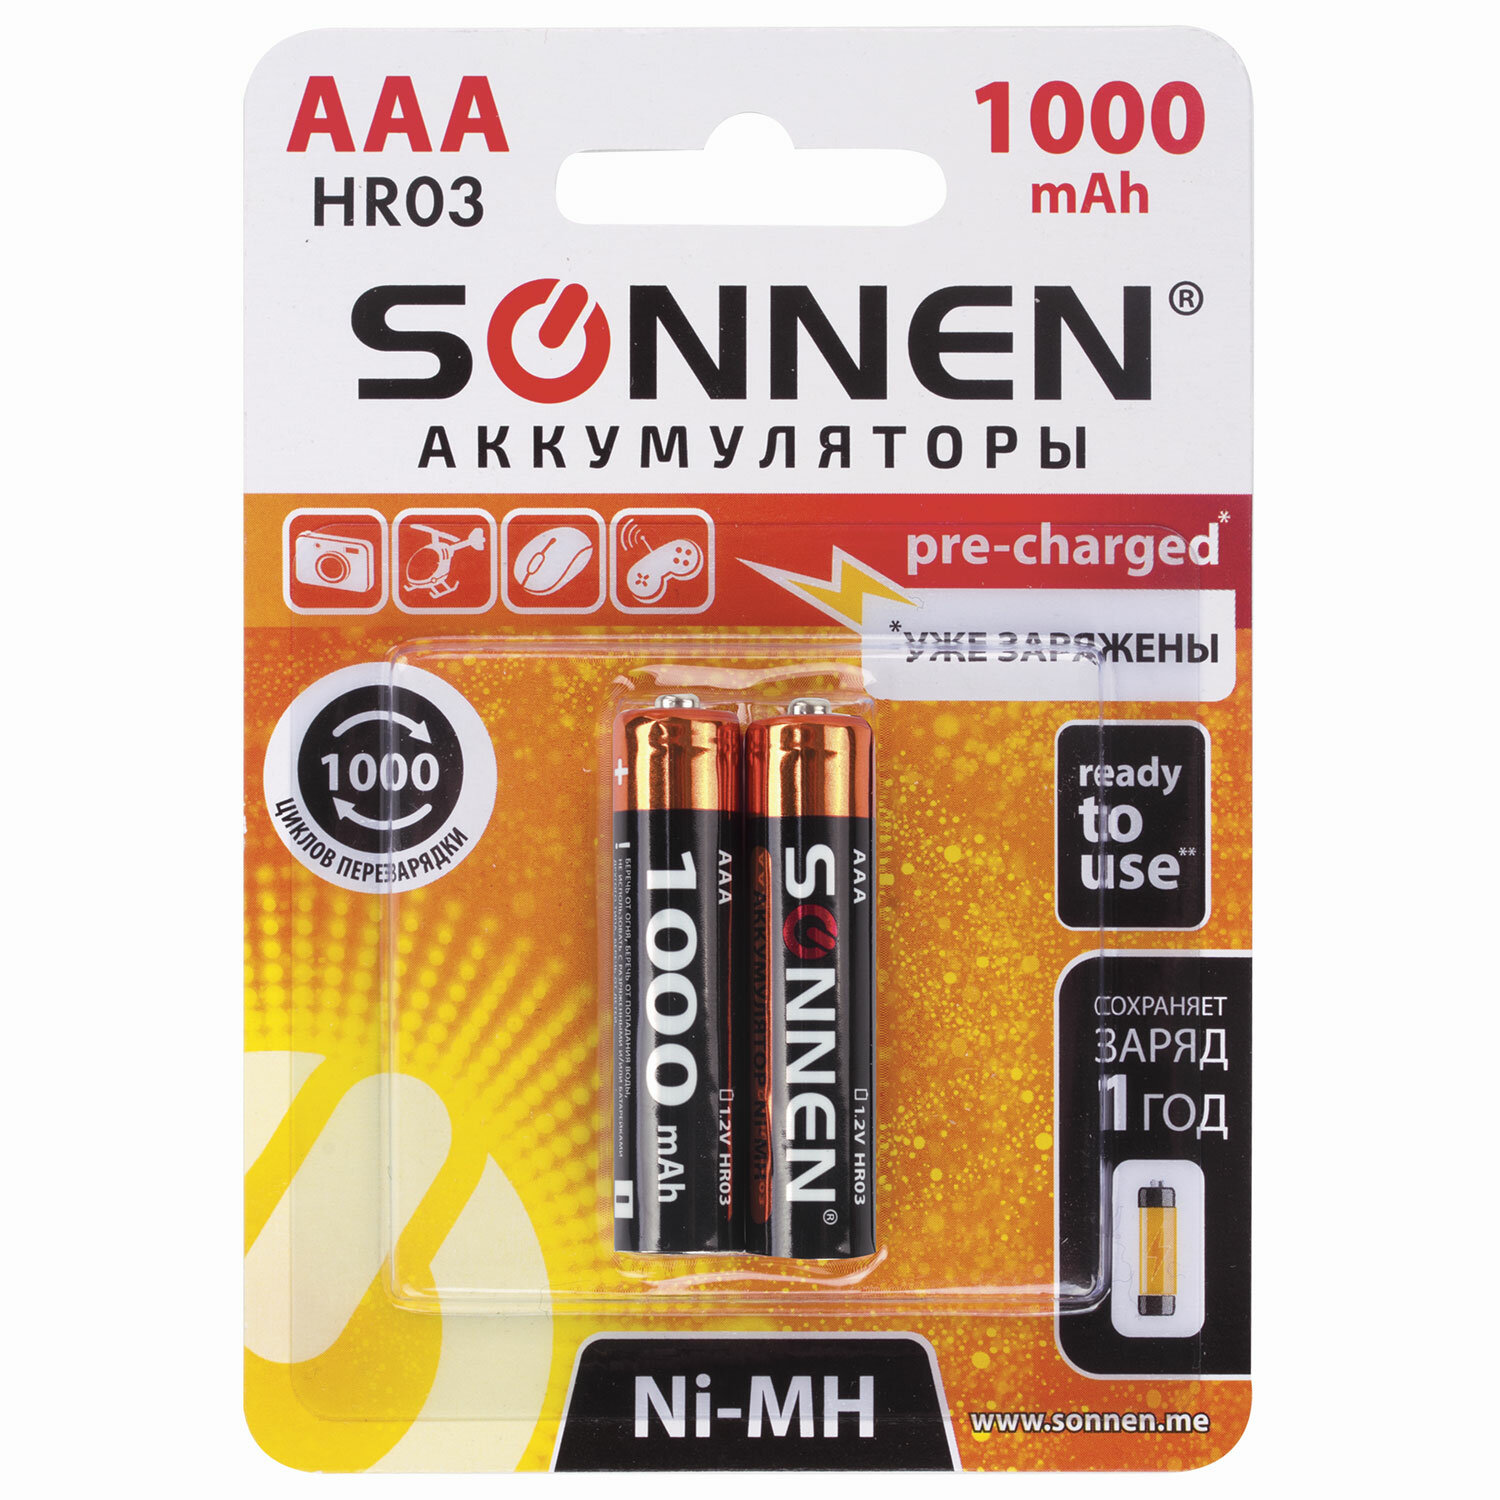 Батарейки аккумуляторные 2 шт., SONNEN 454237, AAA (HR03), Ni-Mh, 1000 mAh